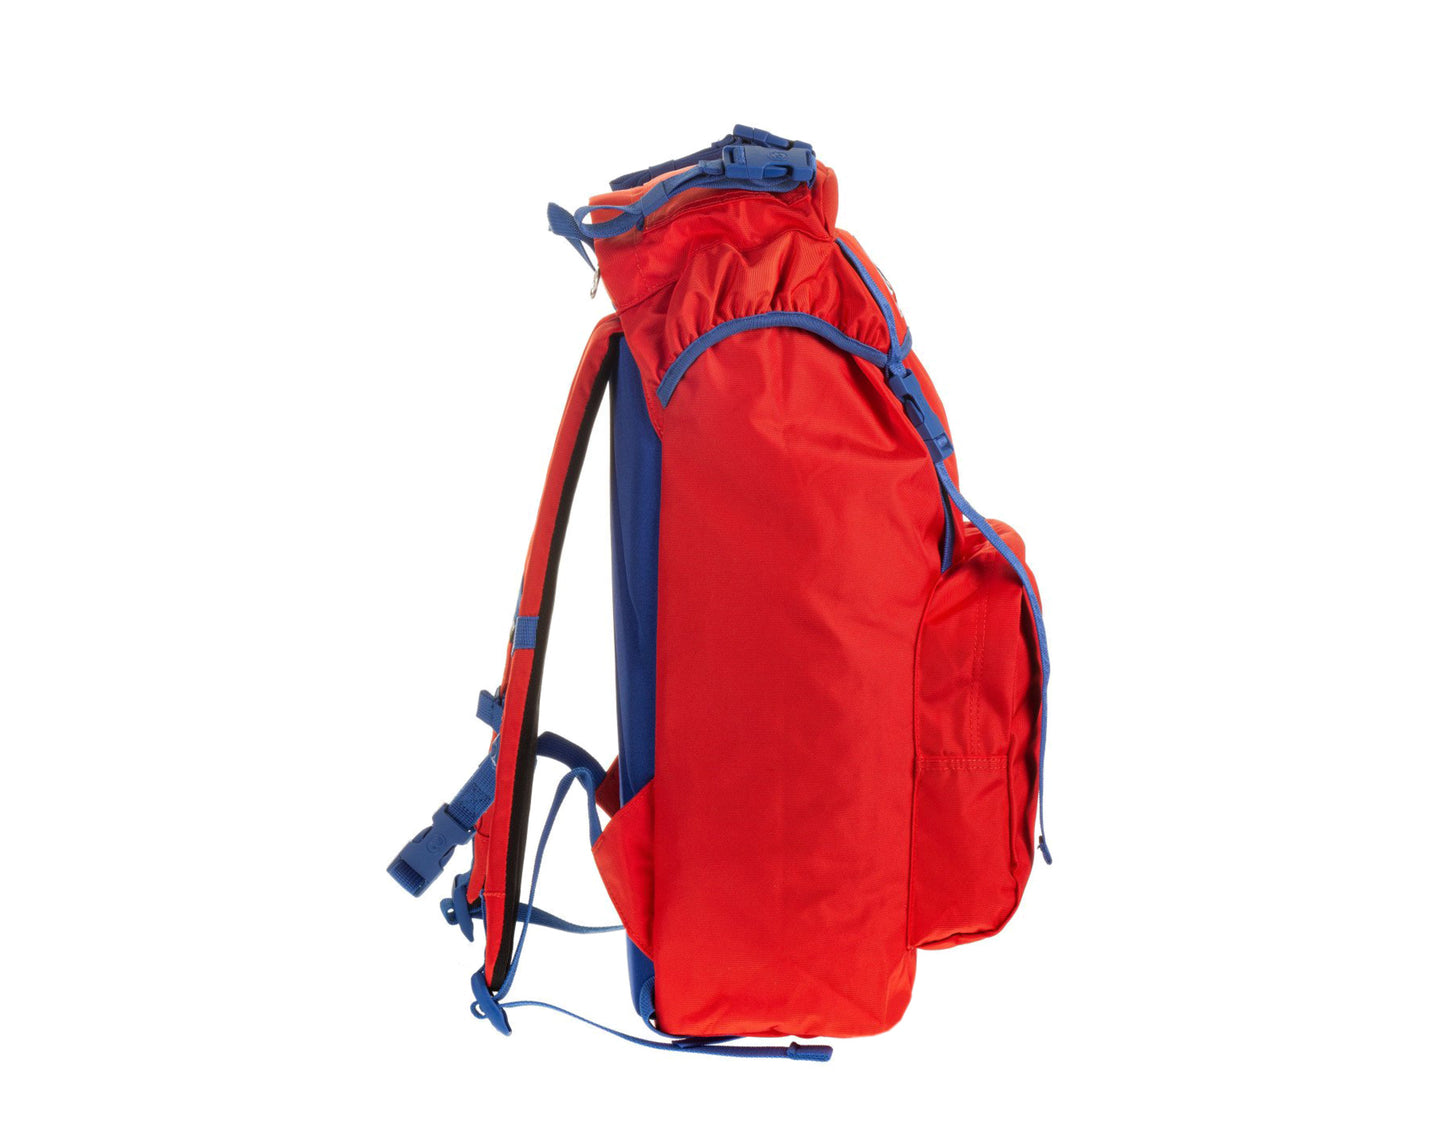 Invicta Monviso 1 Icon Fiesta Red/Blue Backpack 206001903-411